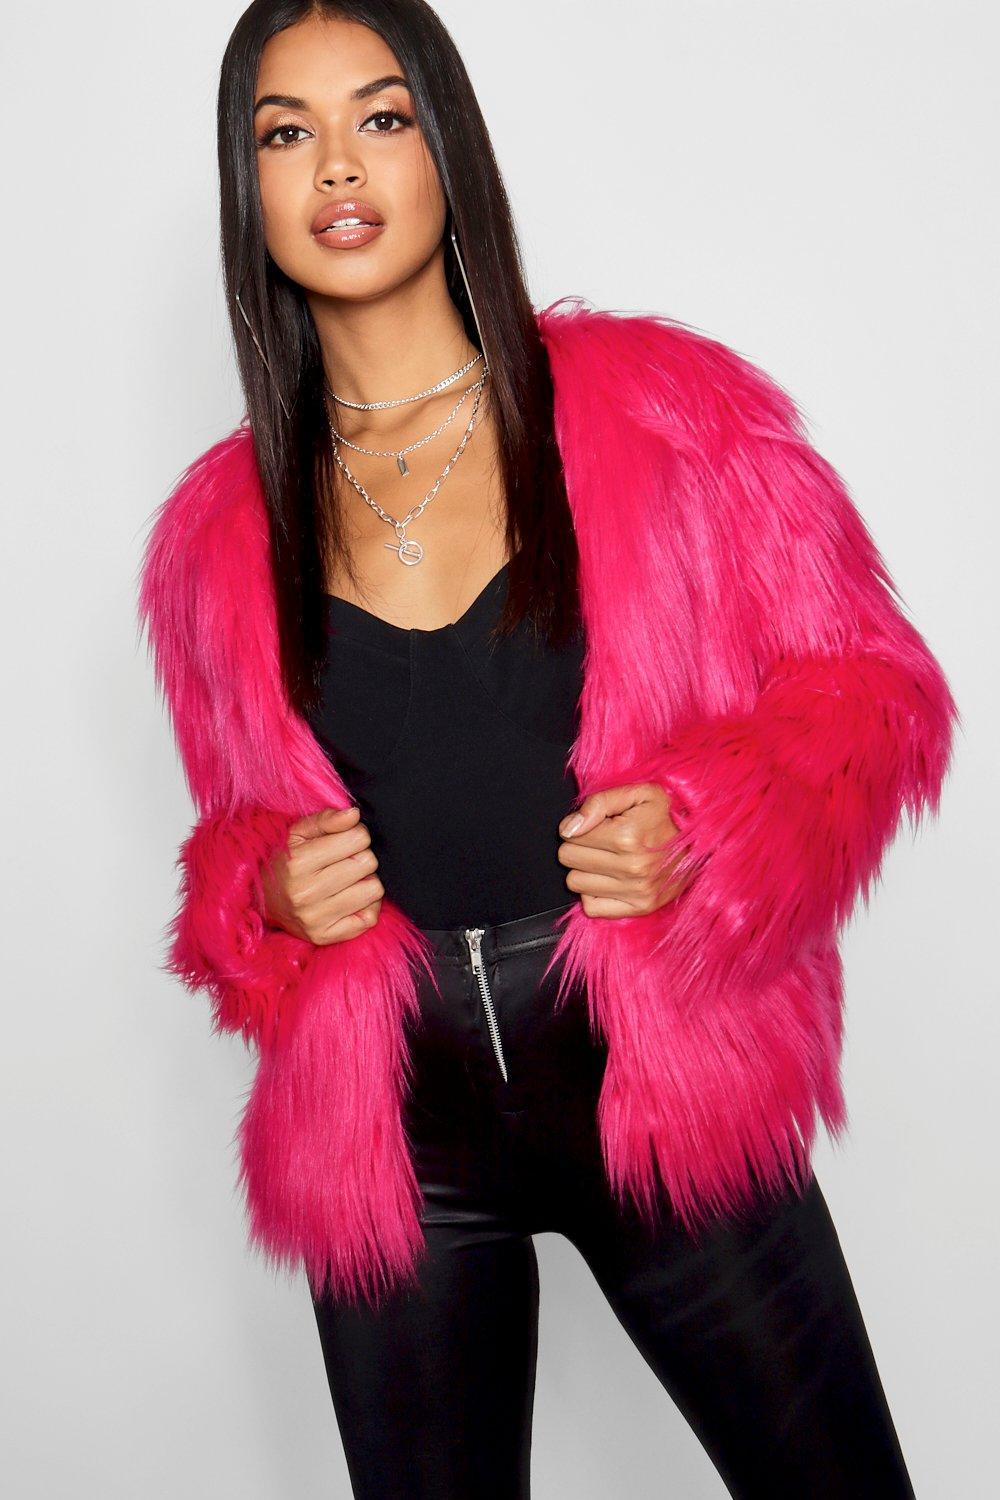 Boohoo Shaggy Faux Fur Coat in Hot Pink (Pink) - Lyst